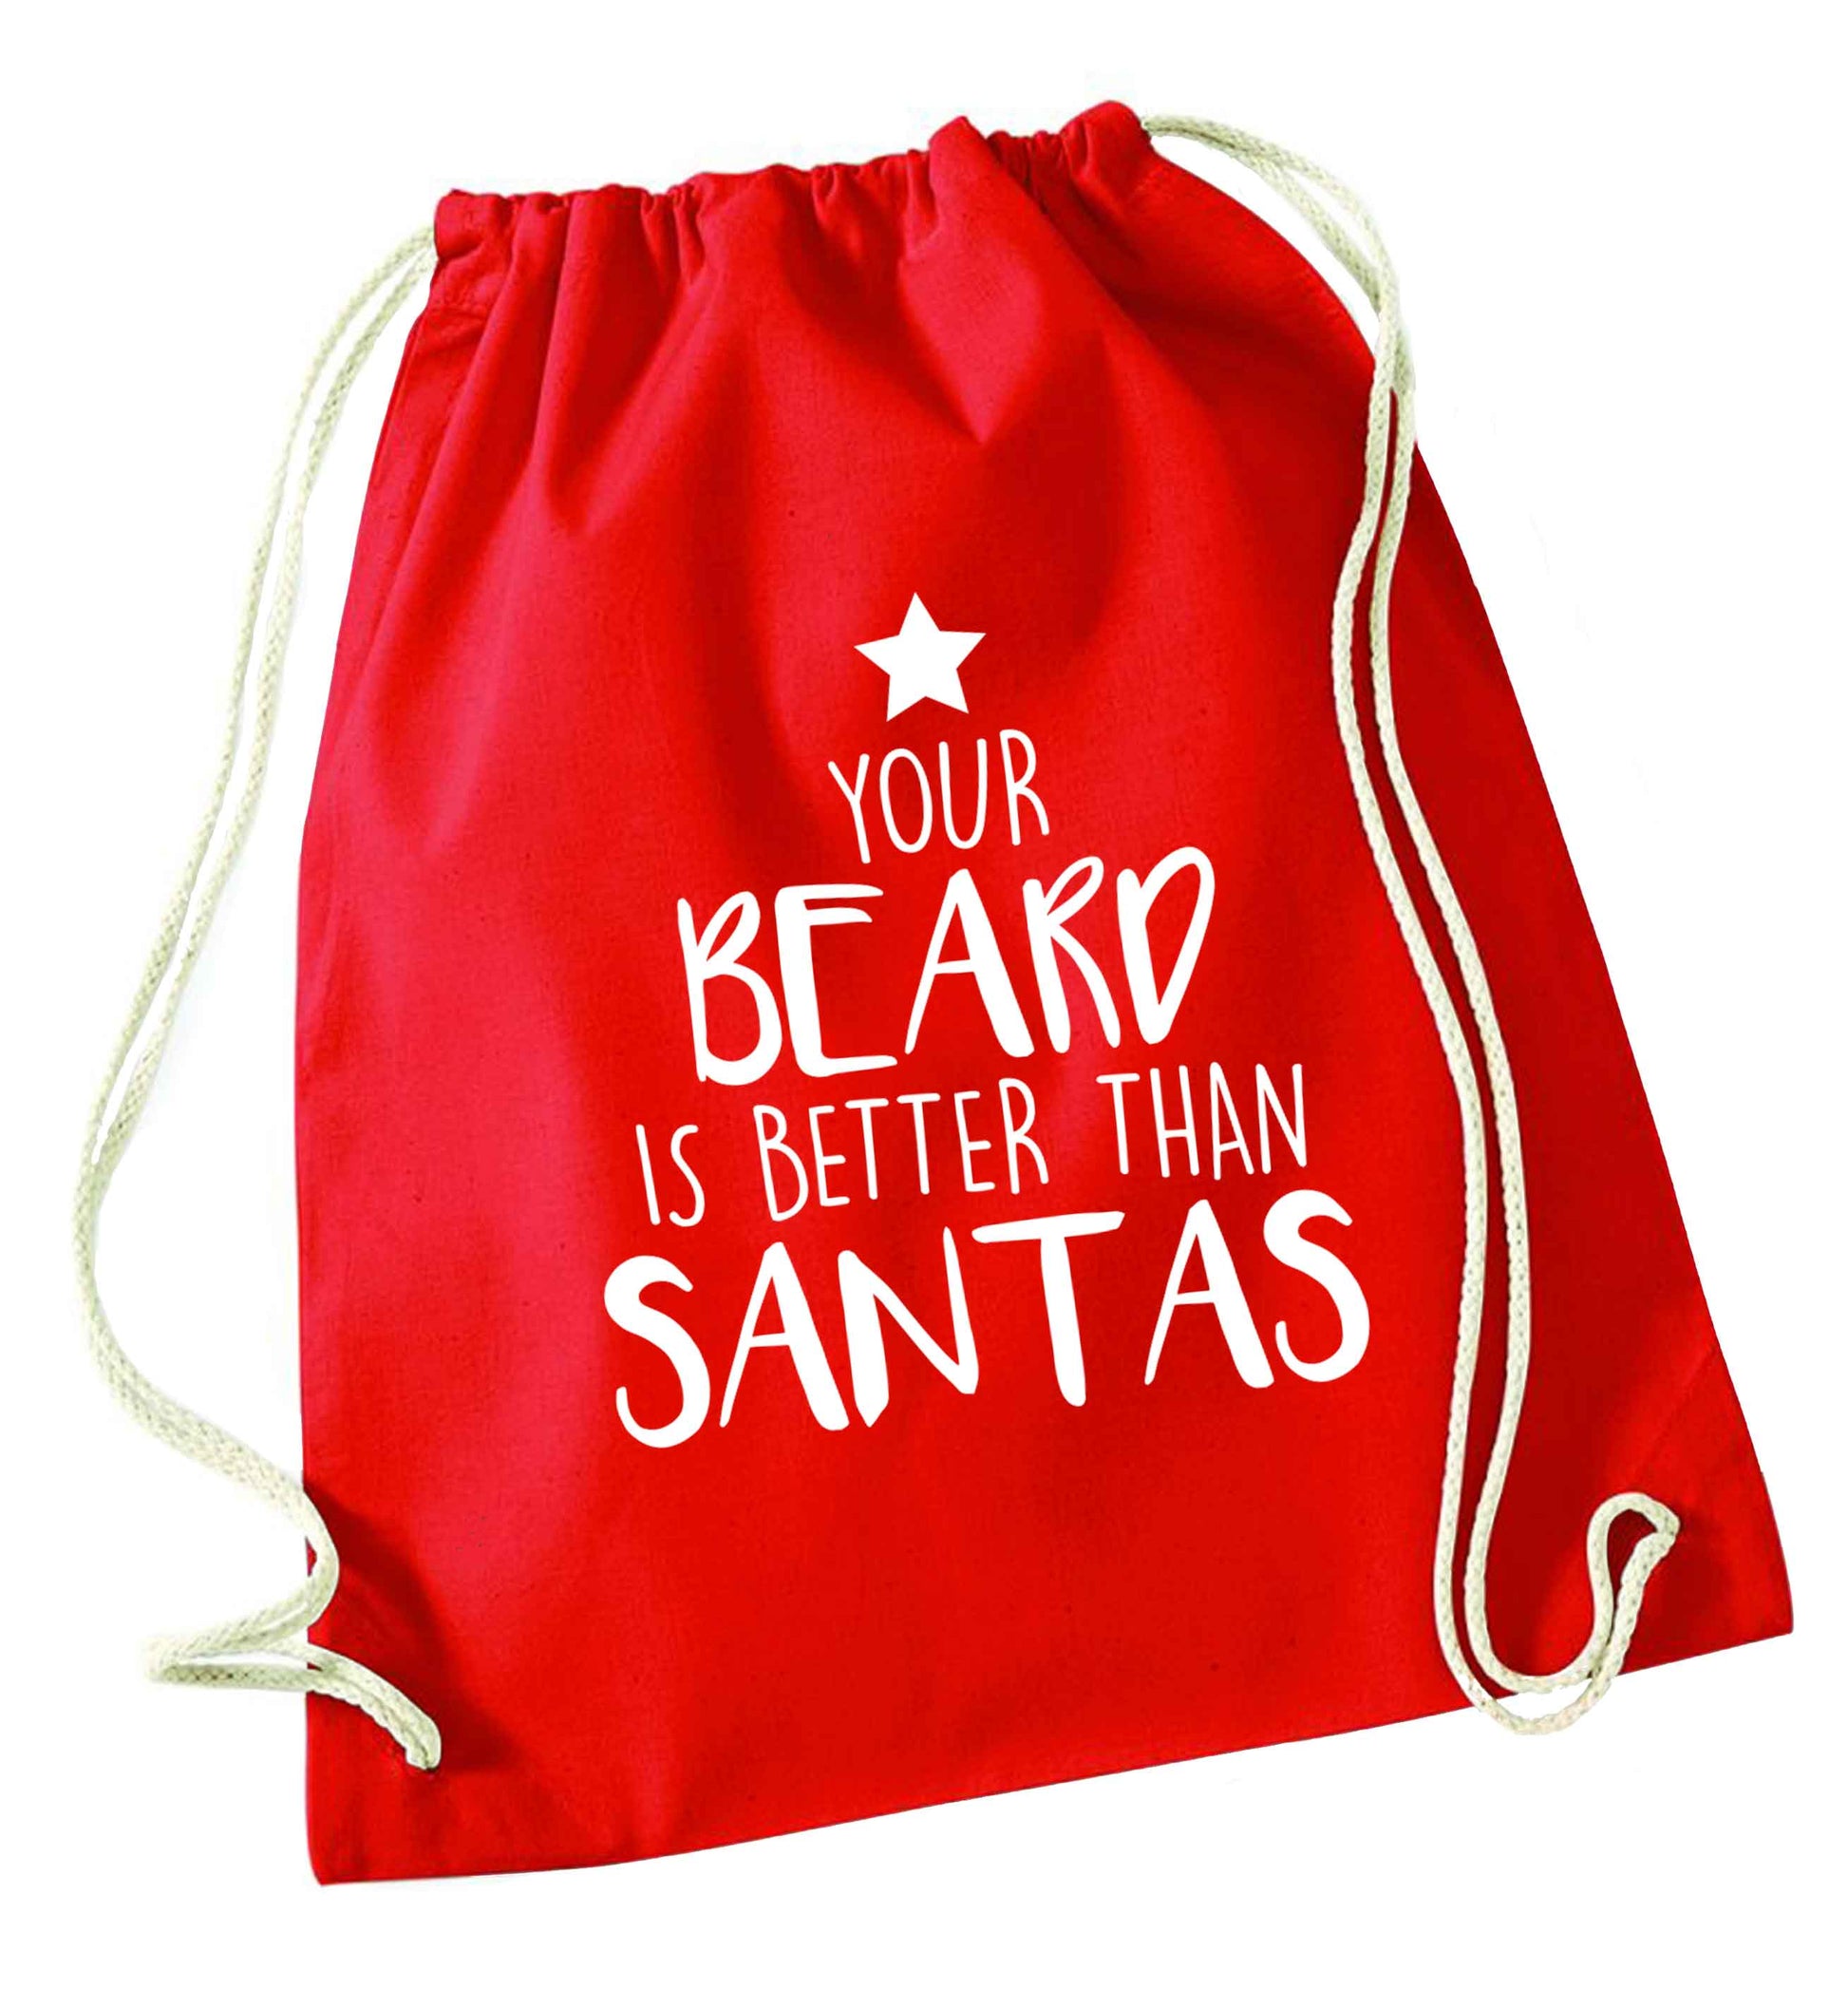 Your Beard Better than Santas red drawstring bag 